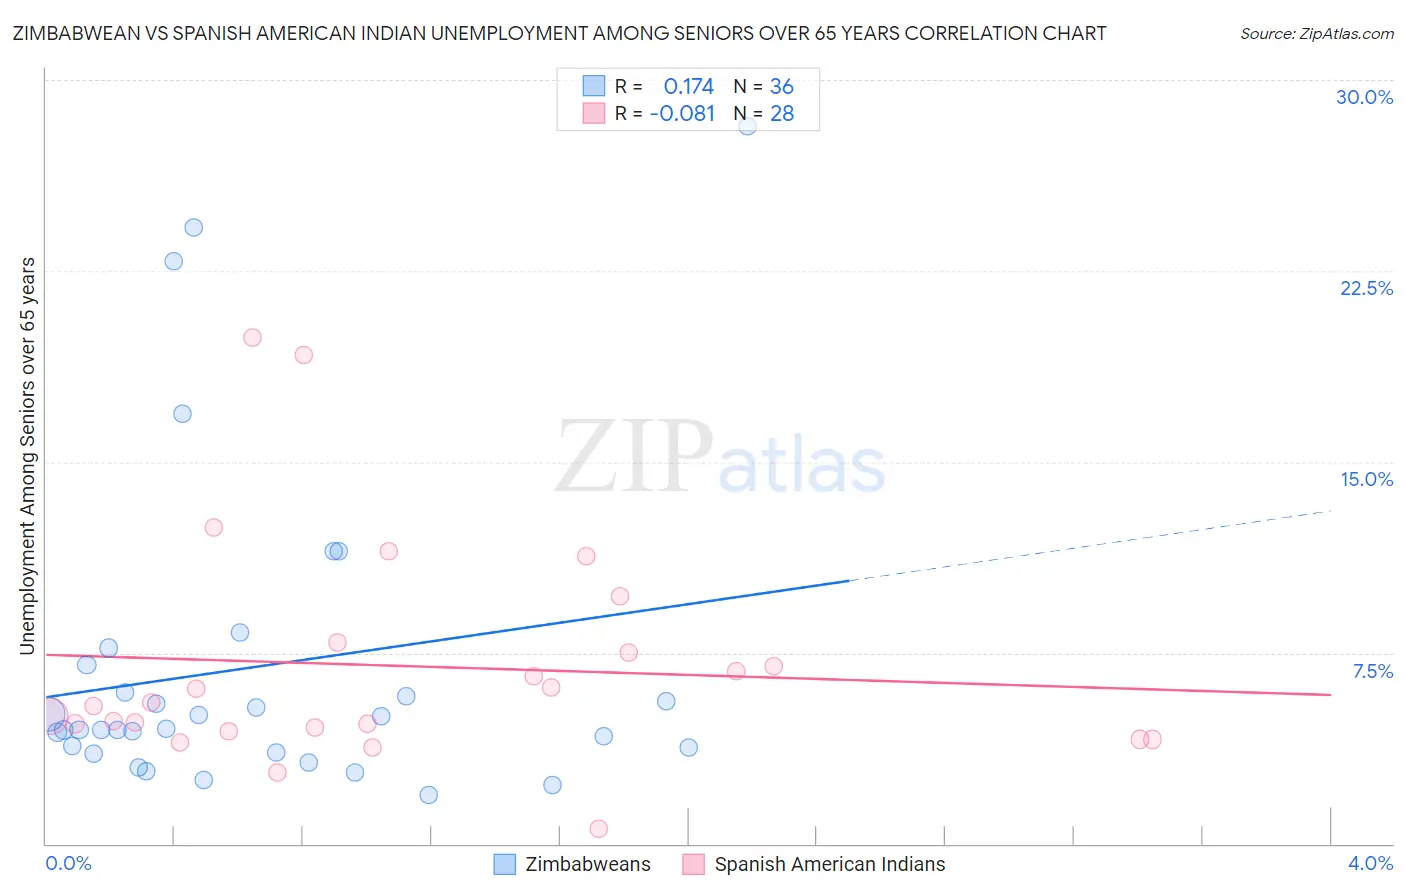 Zimbabwean vs Spanish American Indian Unemployment Among Seniors over 65 years